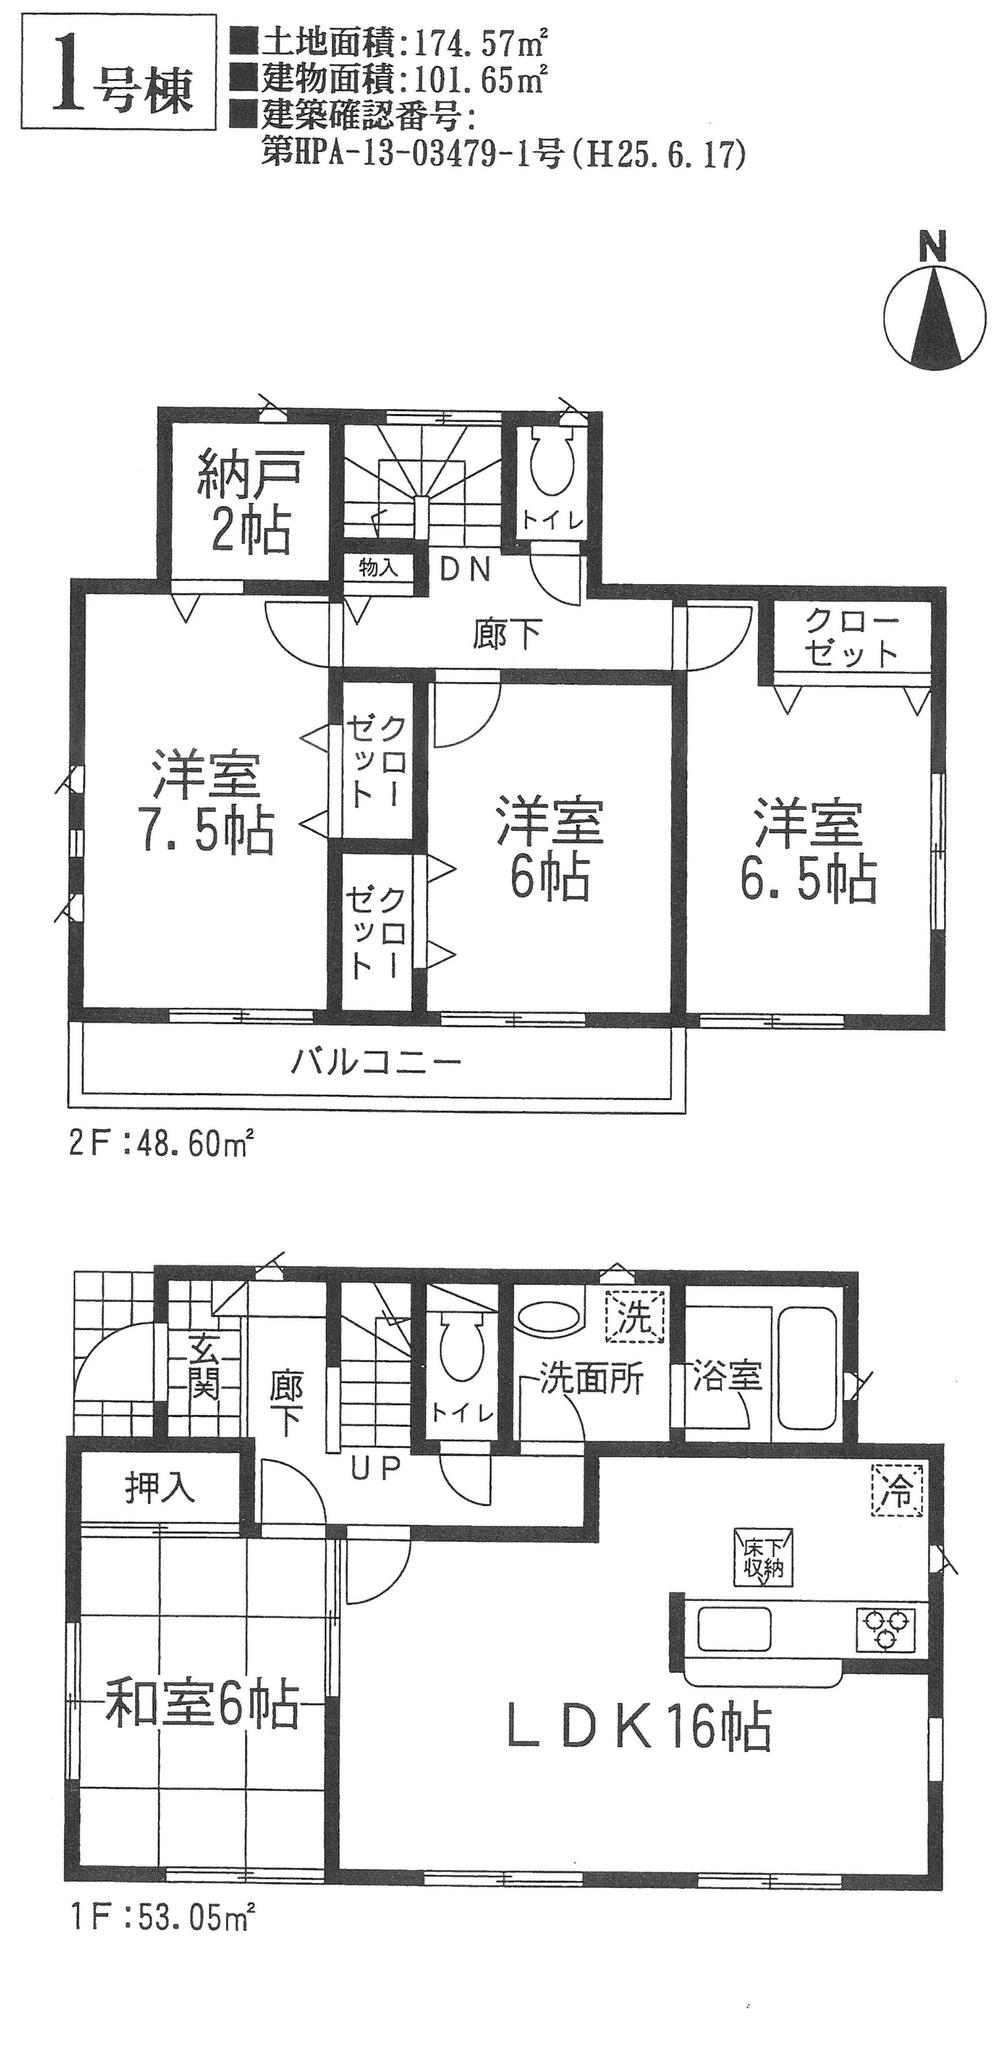 Floor plan. (1 Building), Price 16.8 million yen, 4LDK, Land area 174.57 sq m , Building area 101.65 sq m